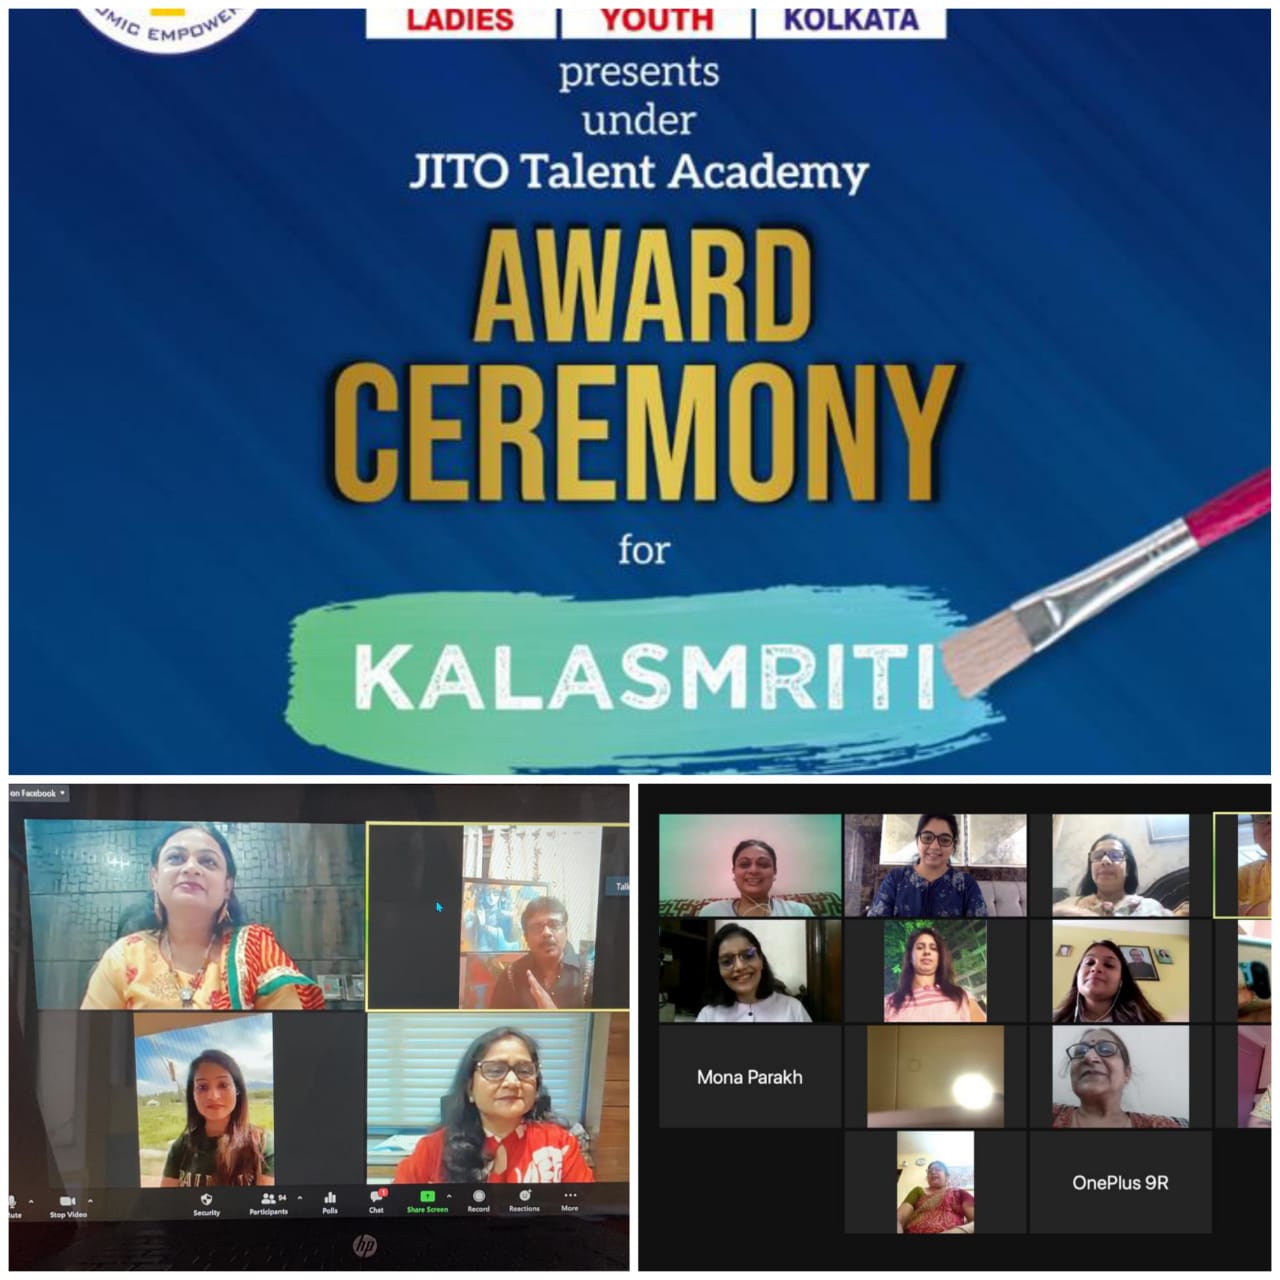 Kalasmriti Art Competition and Award ceremony materials